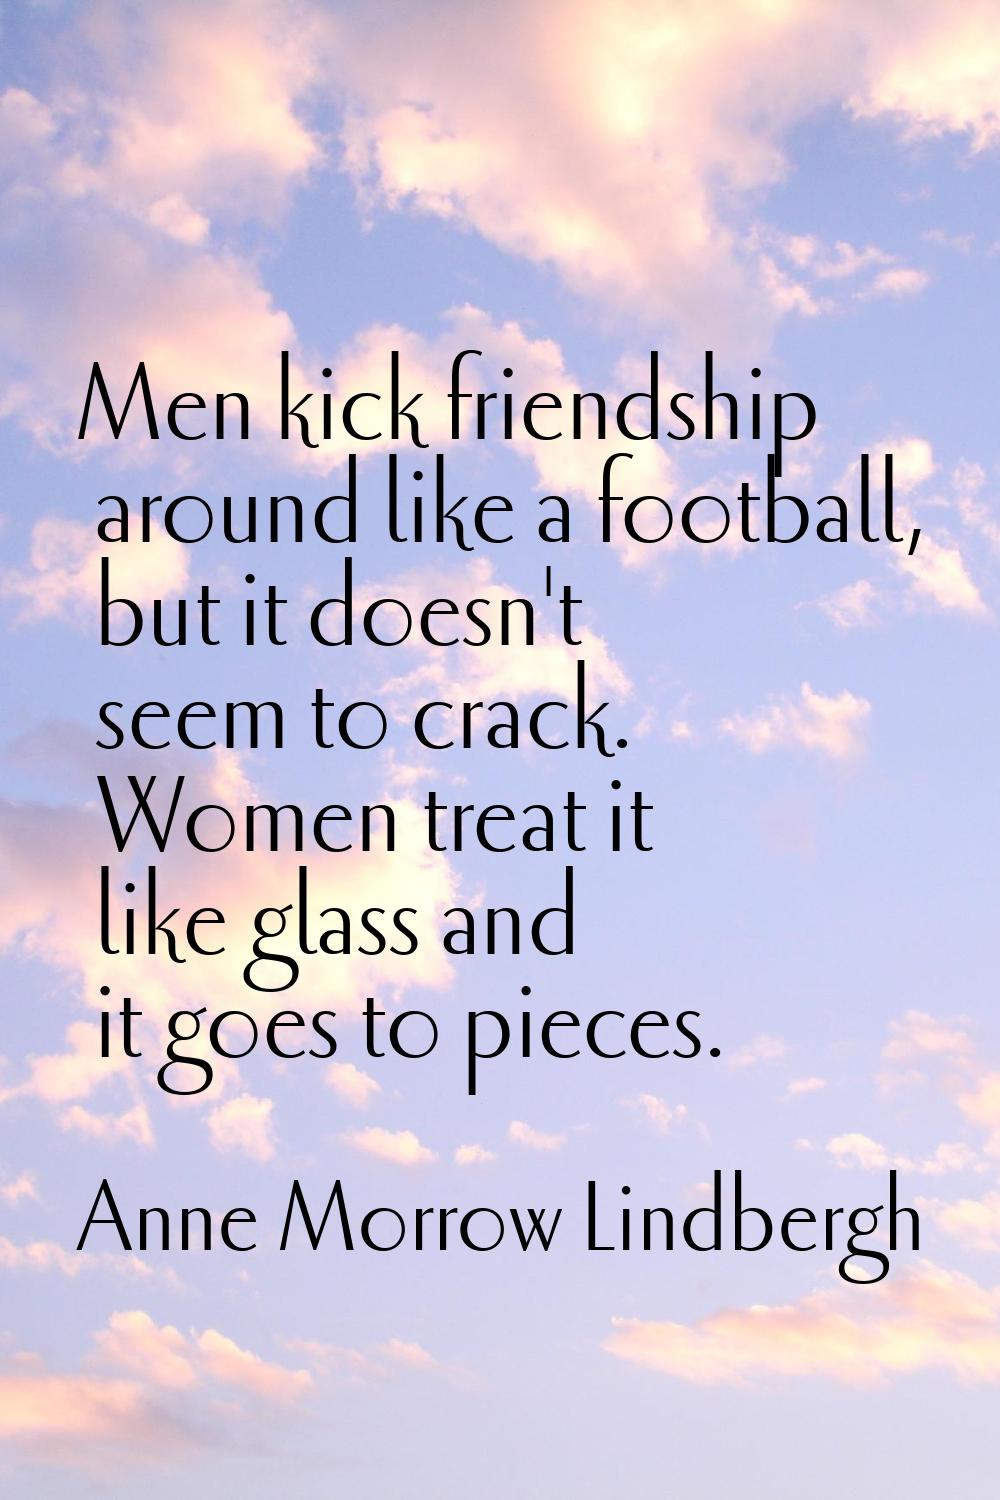 Men kick friendship around like a football, but it doesn't seem to crack. Women treat it like glass